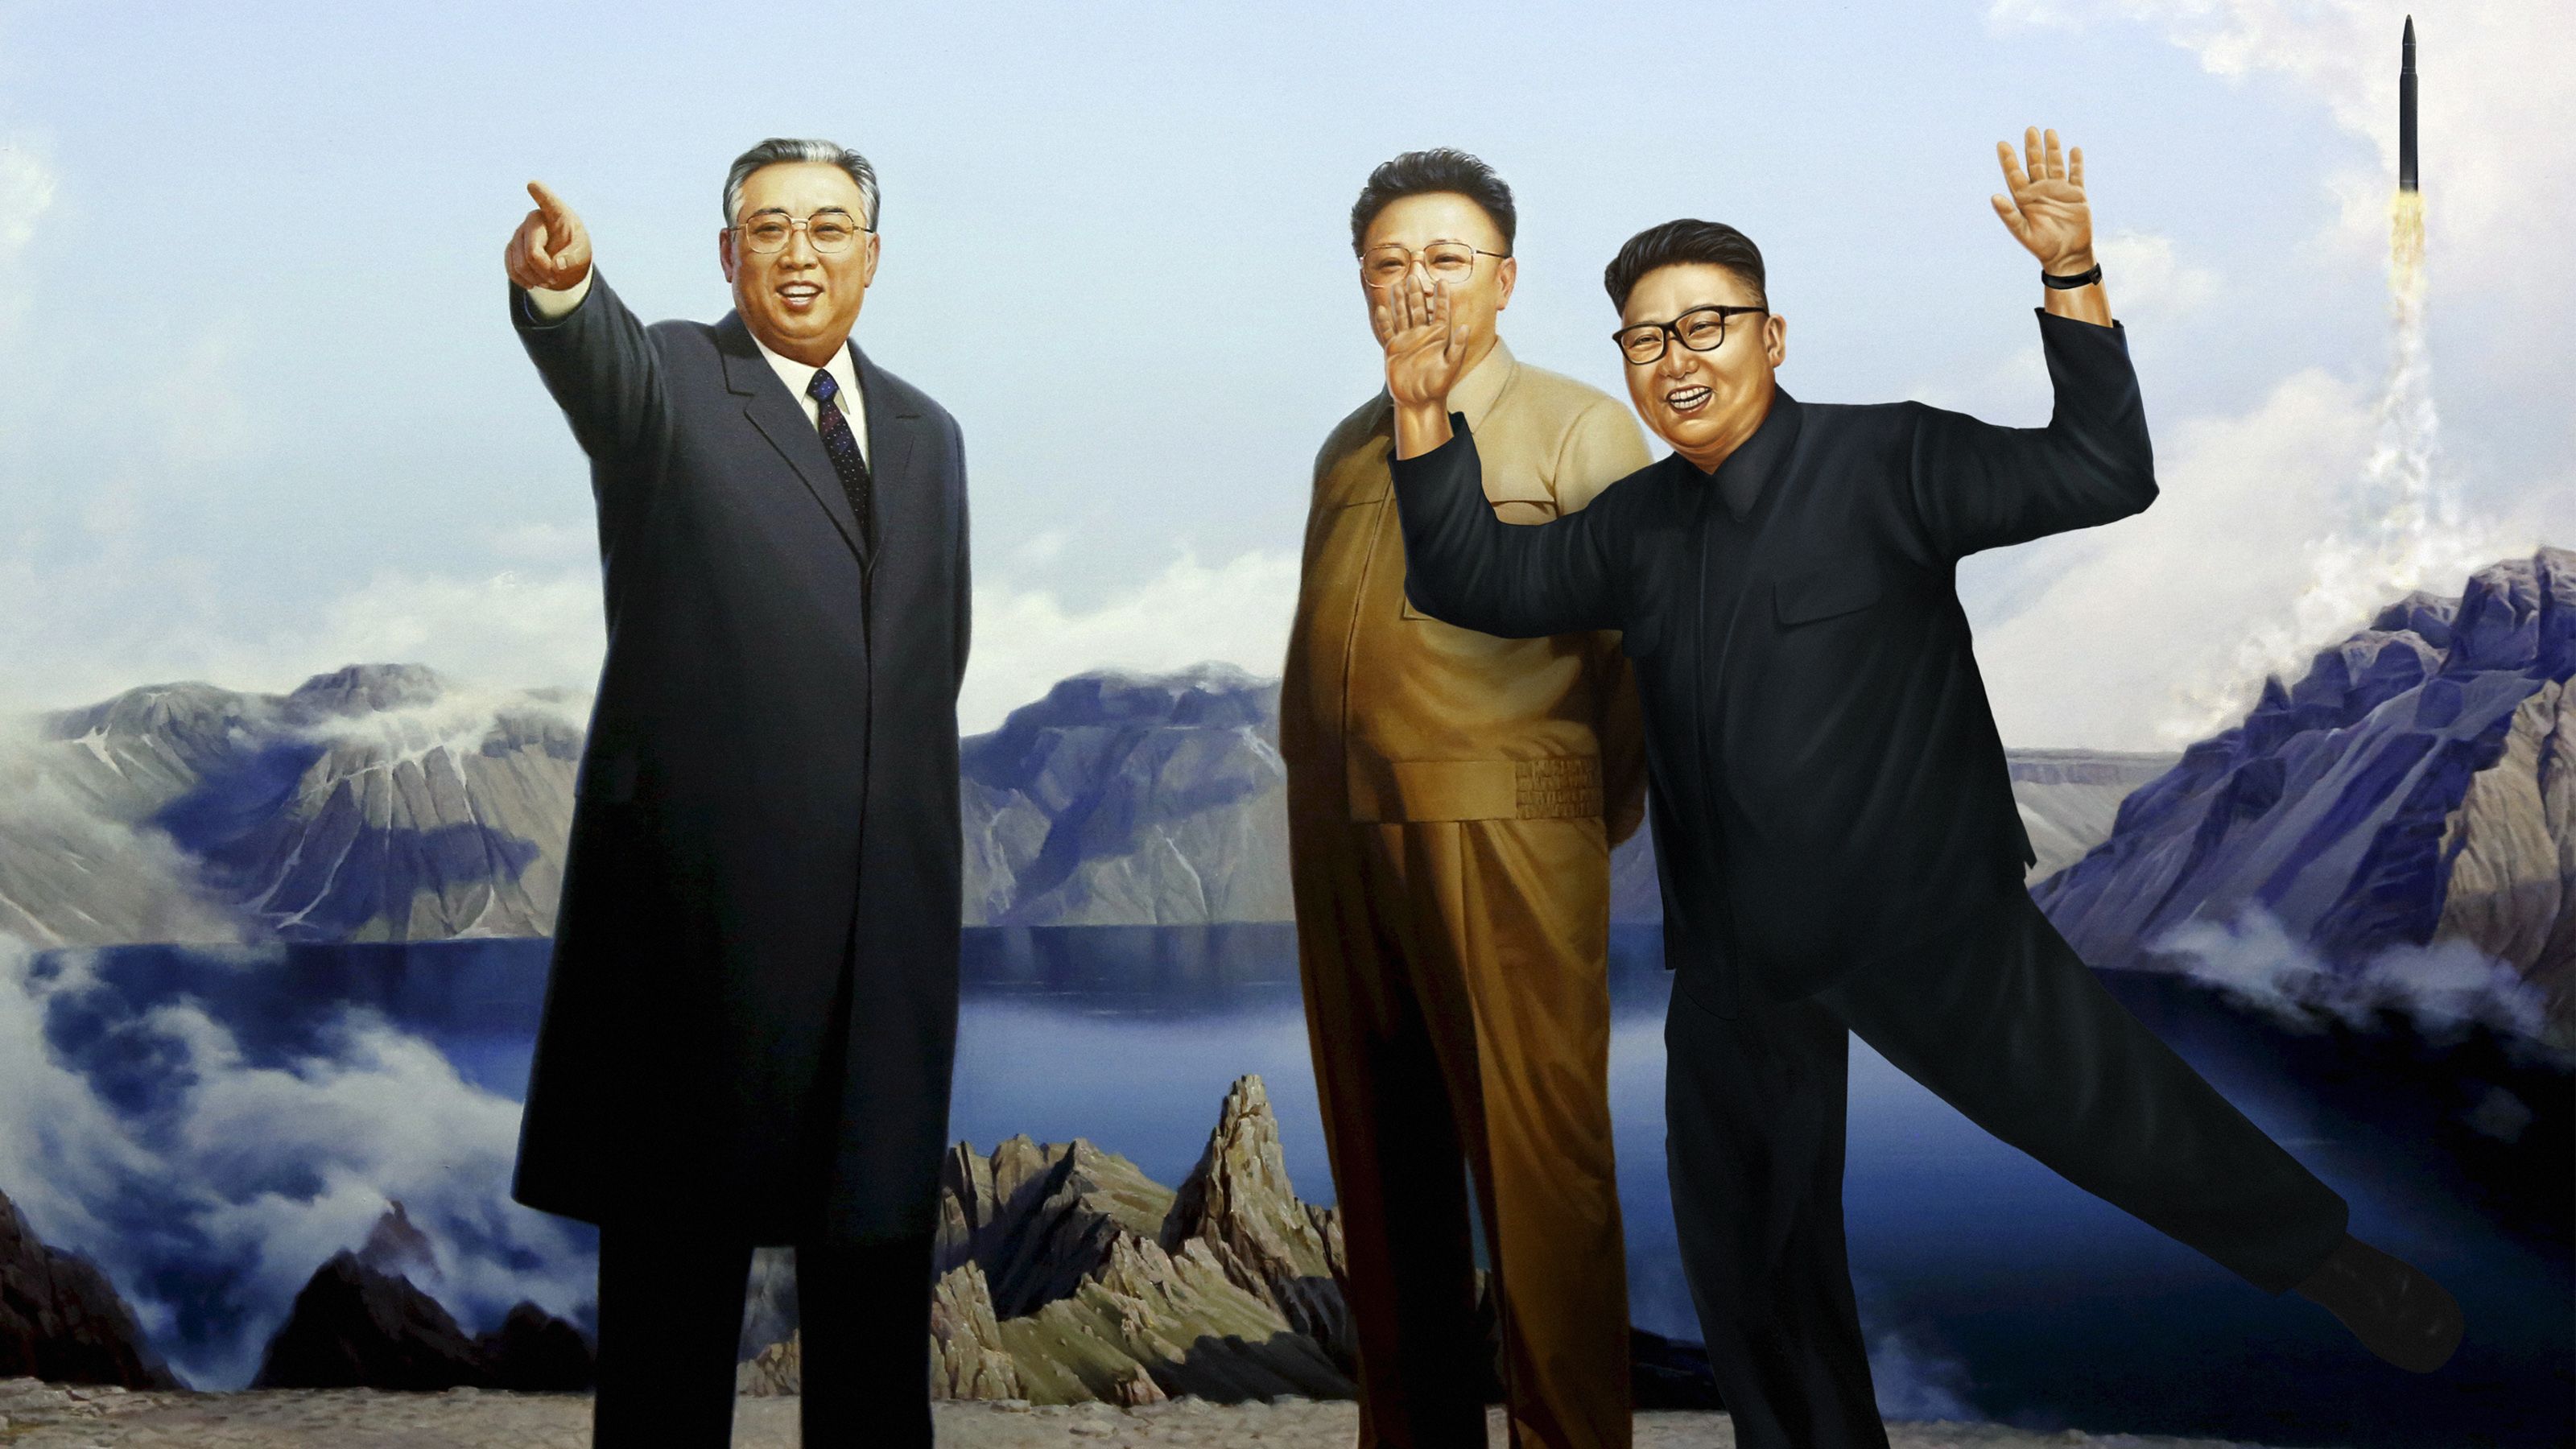 Xxx Video Mom And Sun Sleeping Bag - Inside Kim Jon Un's Plot to Kill His Family - North Korea Nuclear Threat